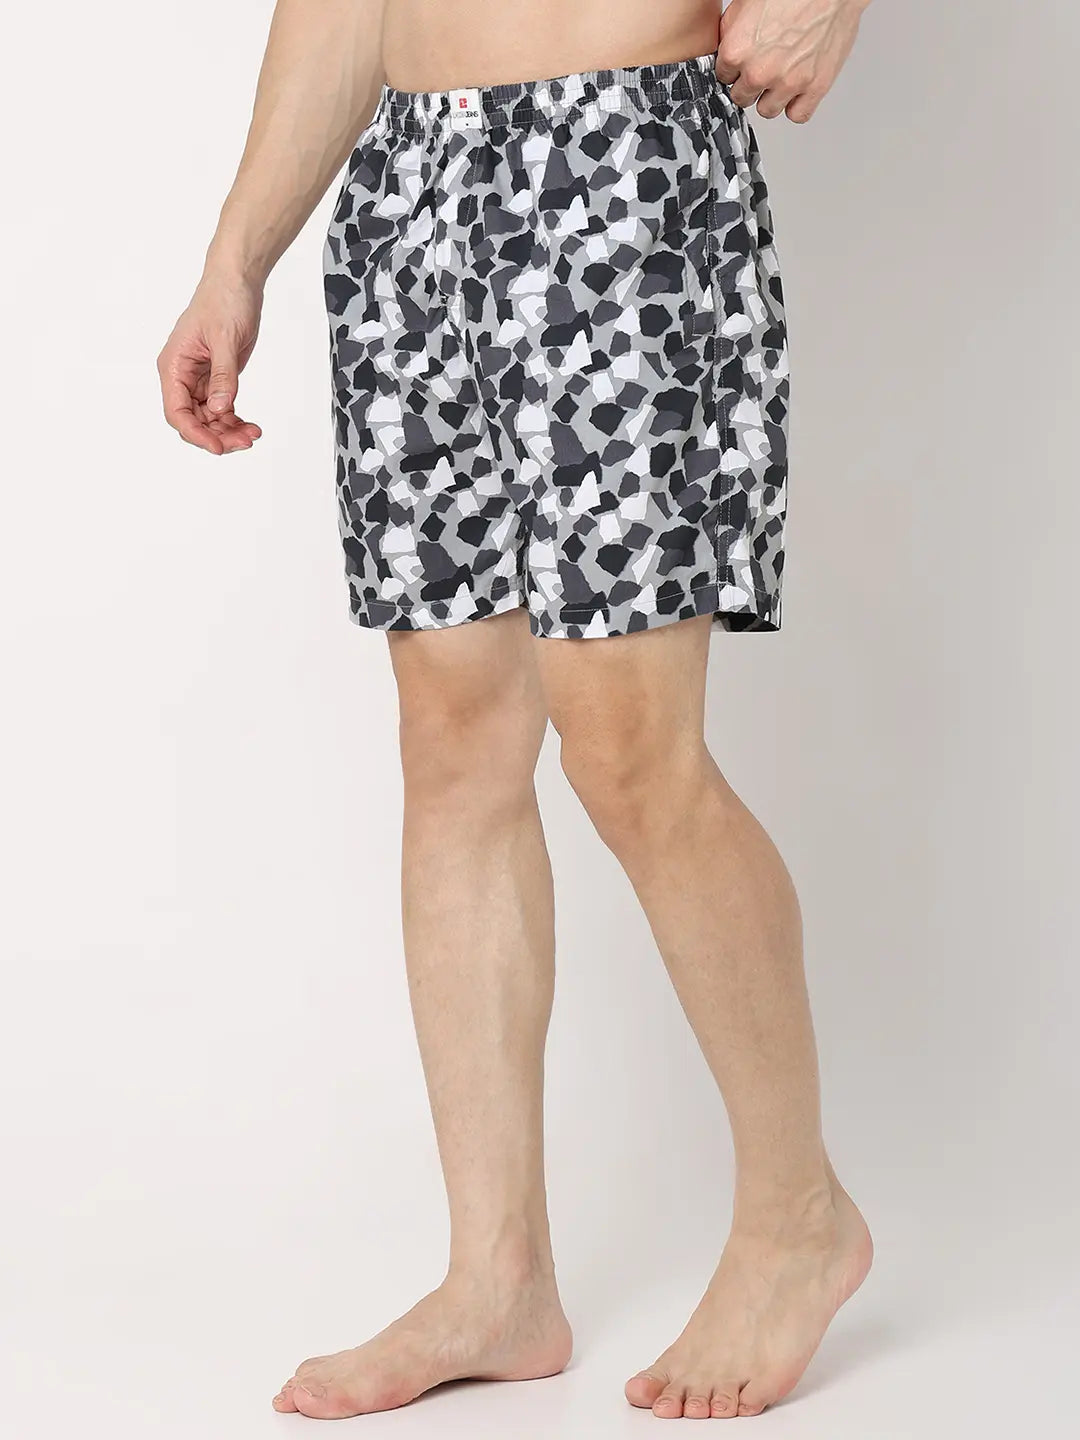 Underjeans by Spykar Men Premium Grey Cotton Blend Regular Fit Boxer Shorts